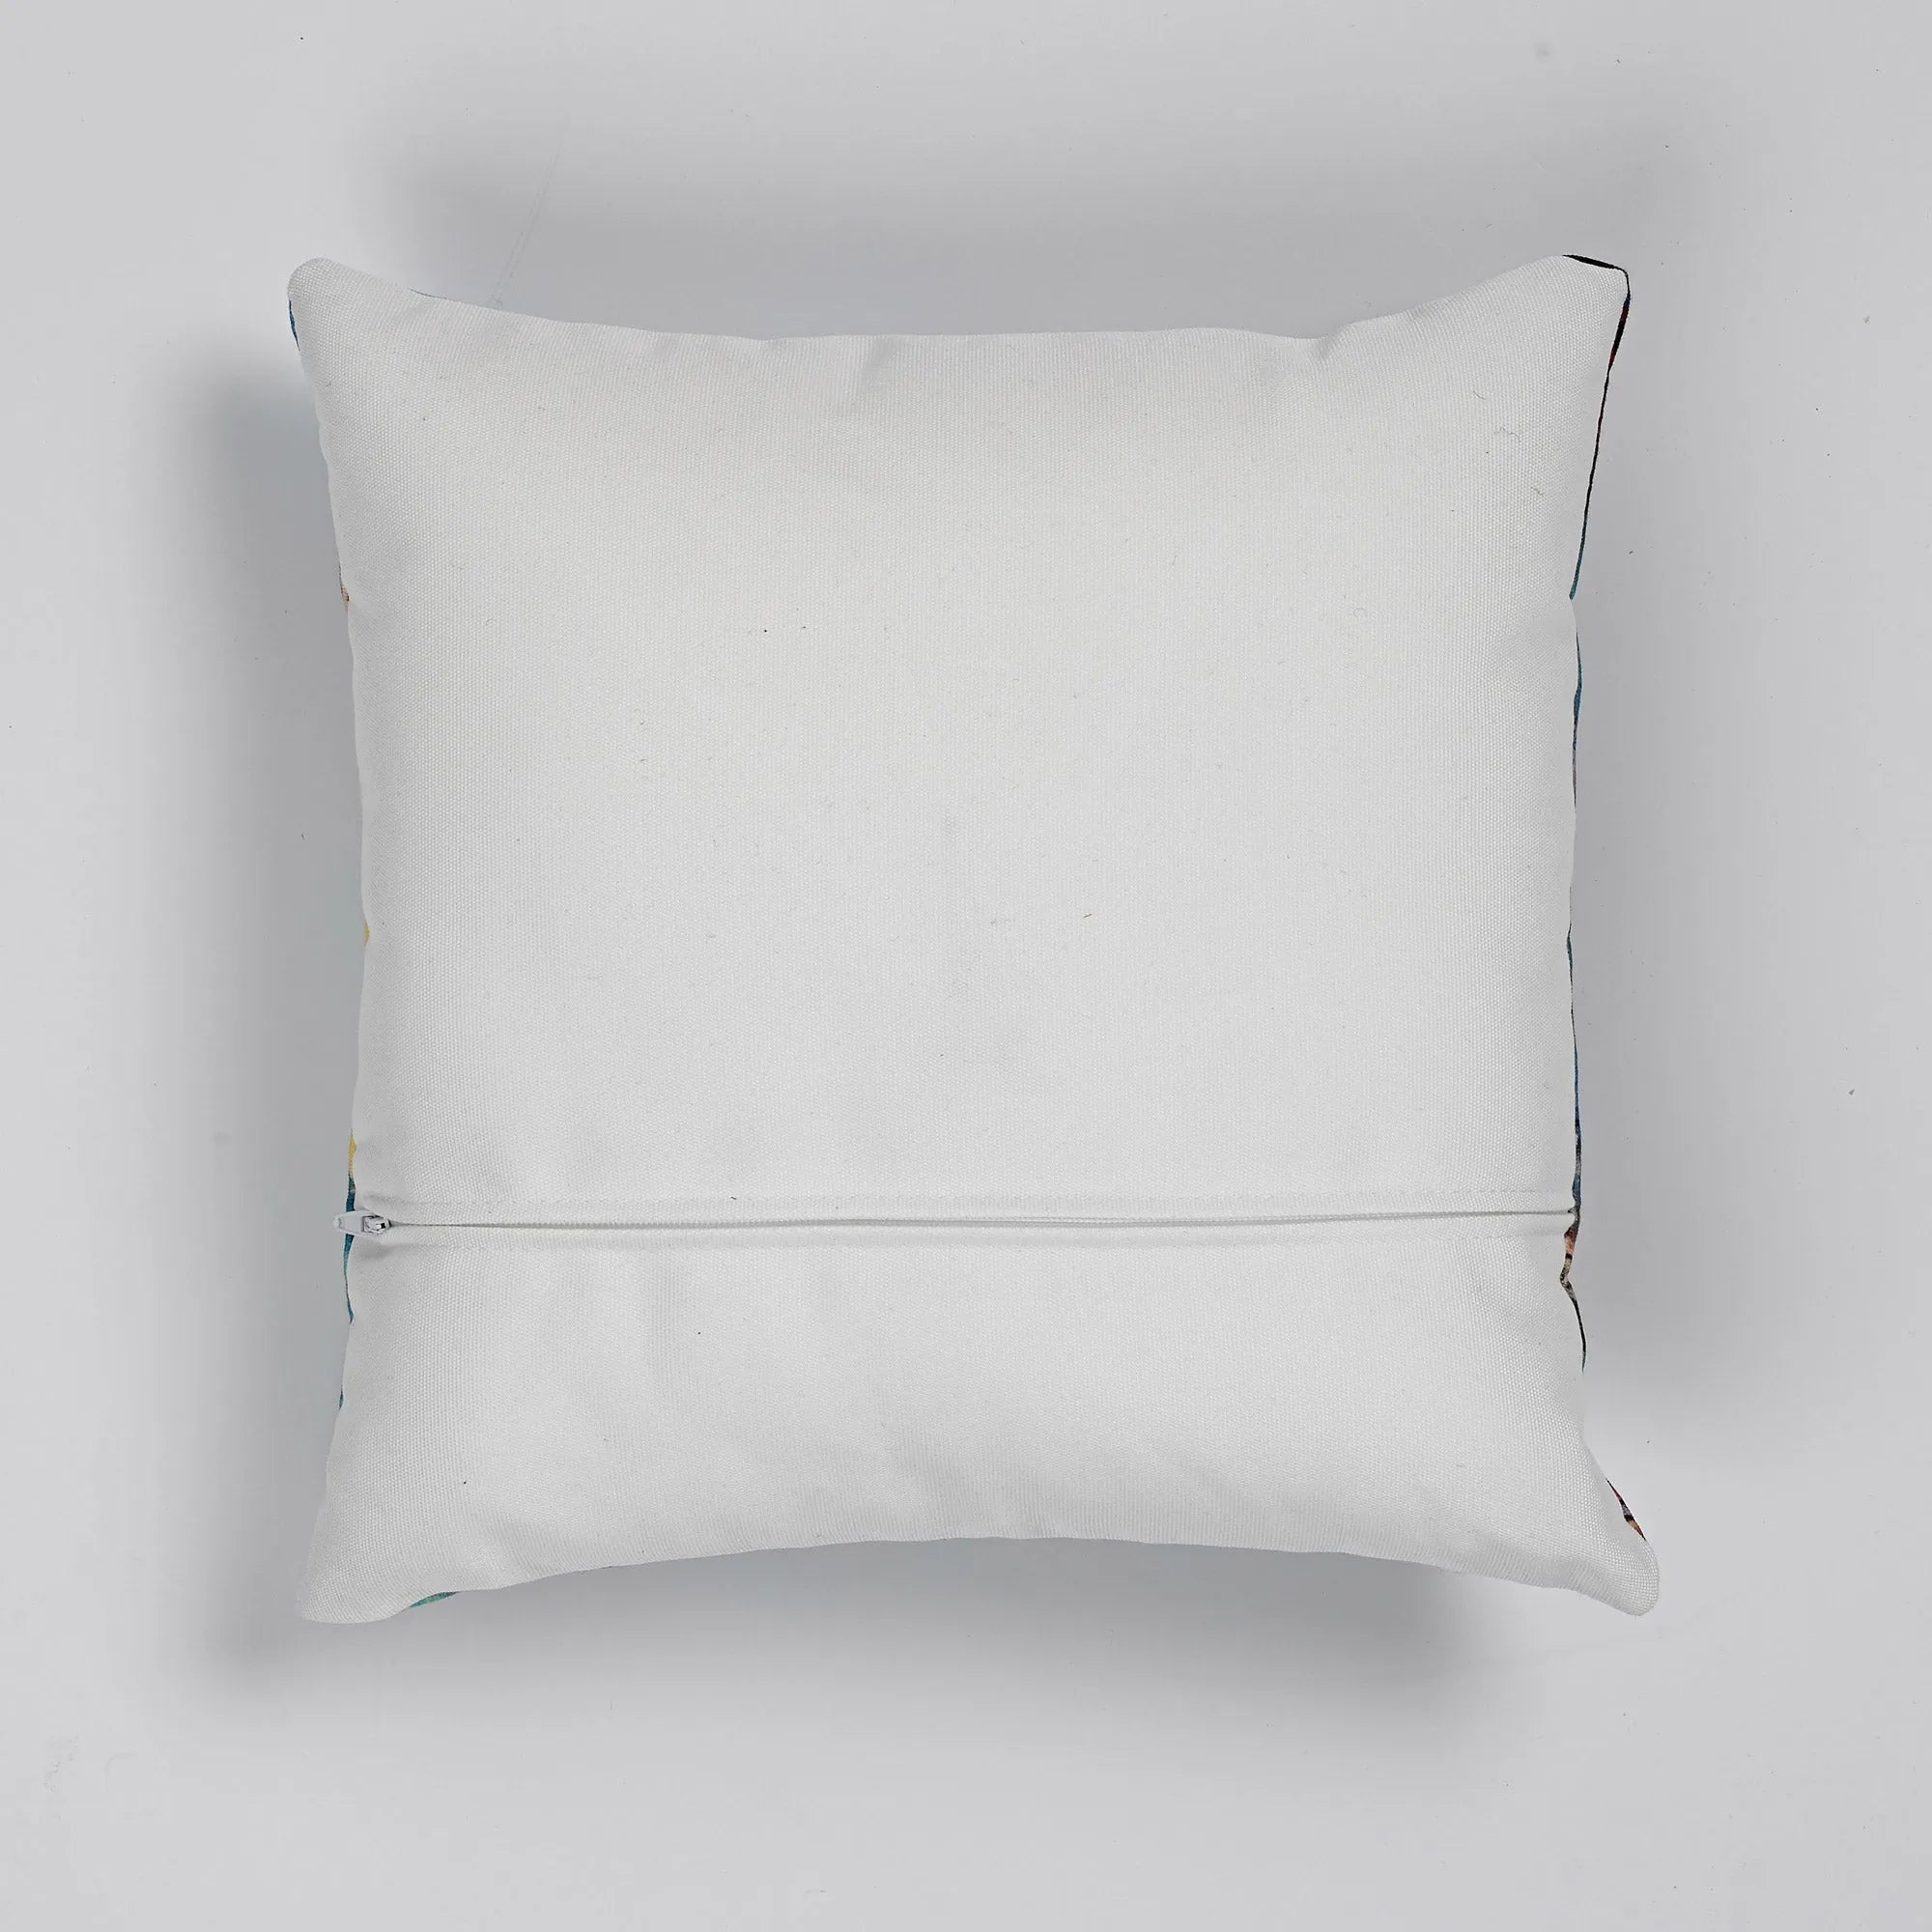 Fukusa + Carp In Waves - Meiji Period Cushion - Throw Pillows - Aesthetic Art